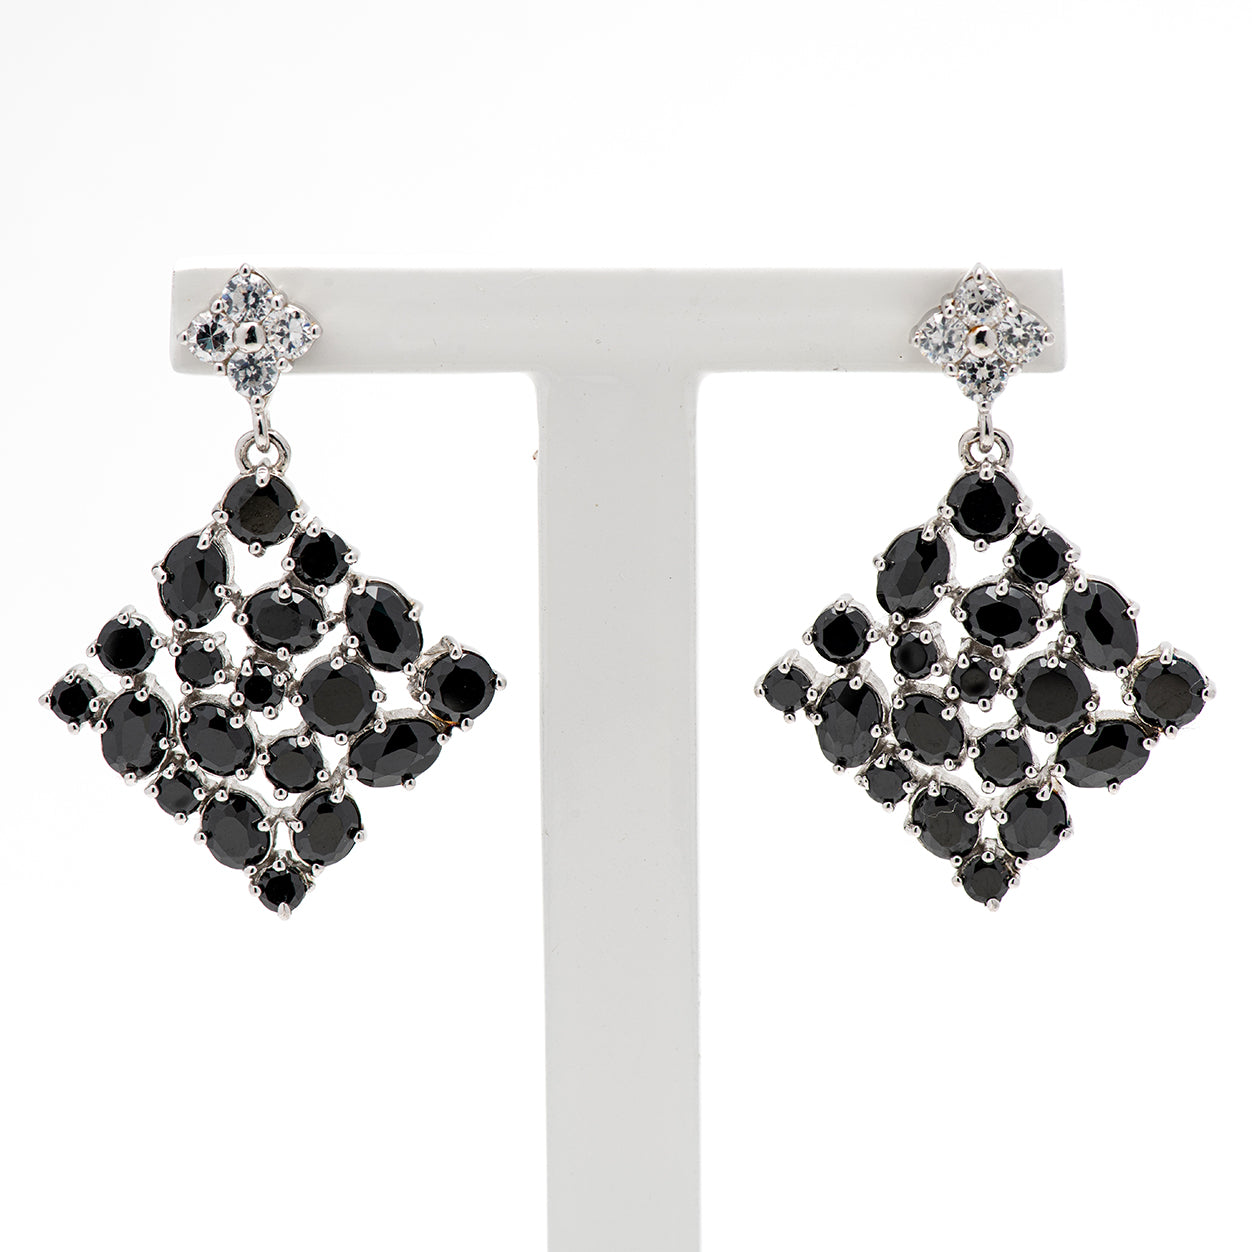 DK-925-099 Serling silver earrings with black cubic Zirconia